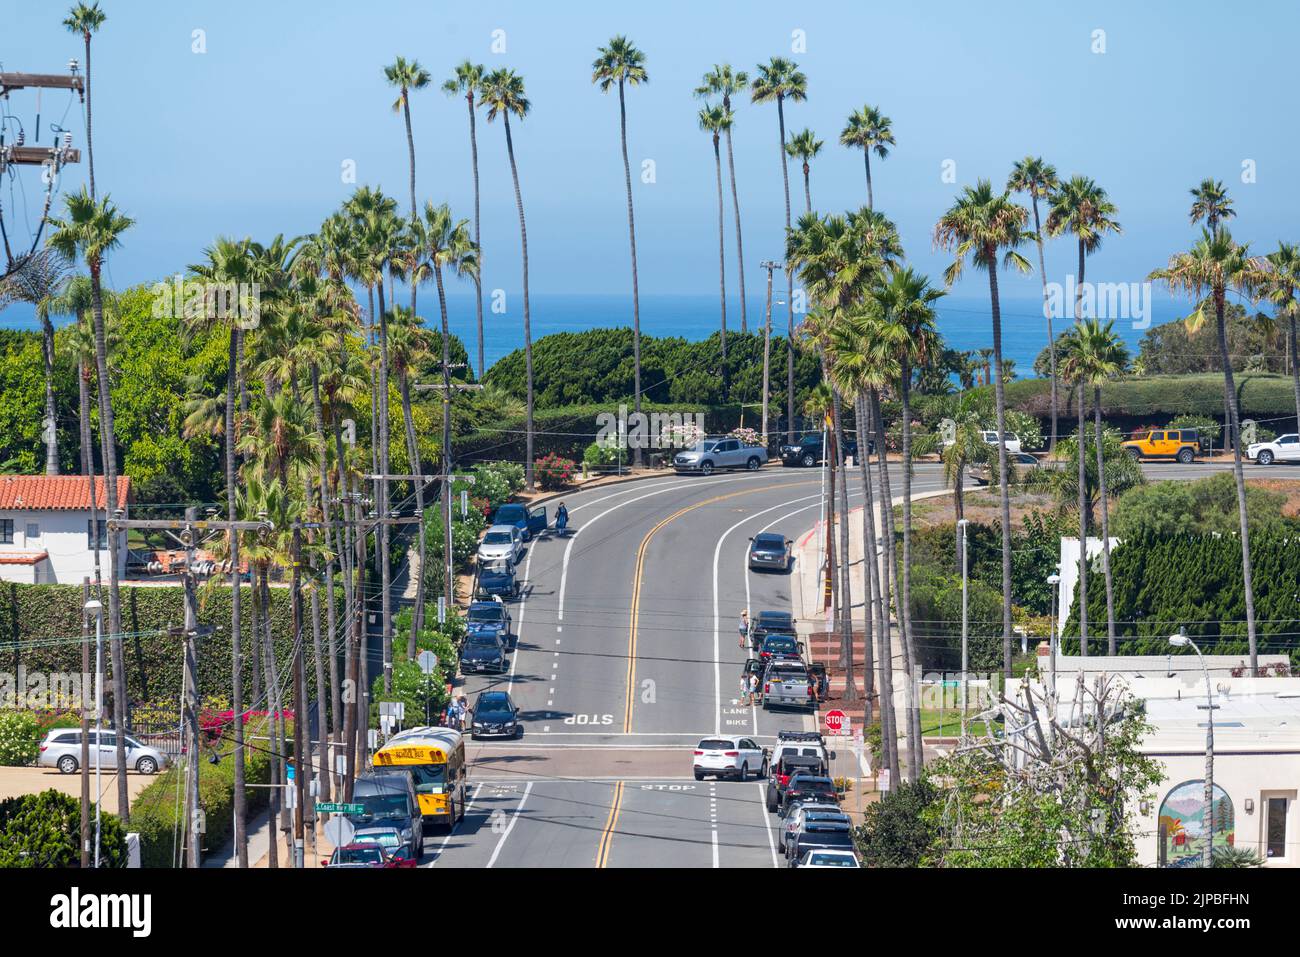 Looking down on the seaside town of Encinitas, California, USA. Stock Photo